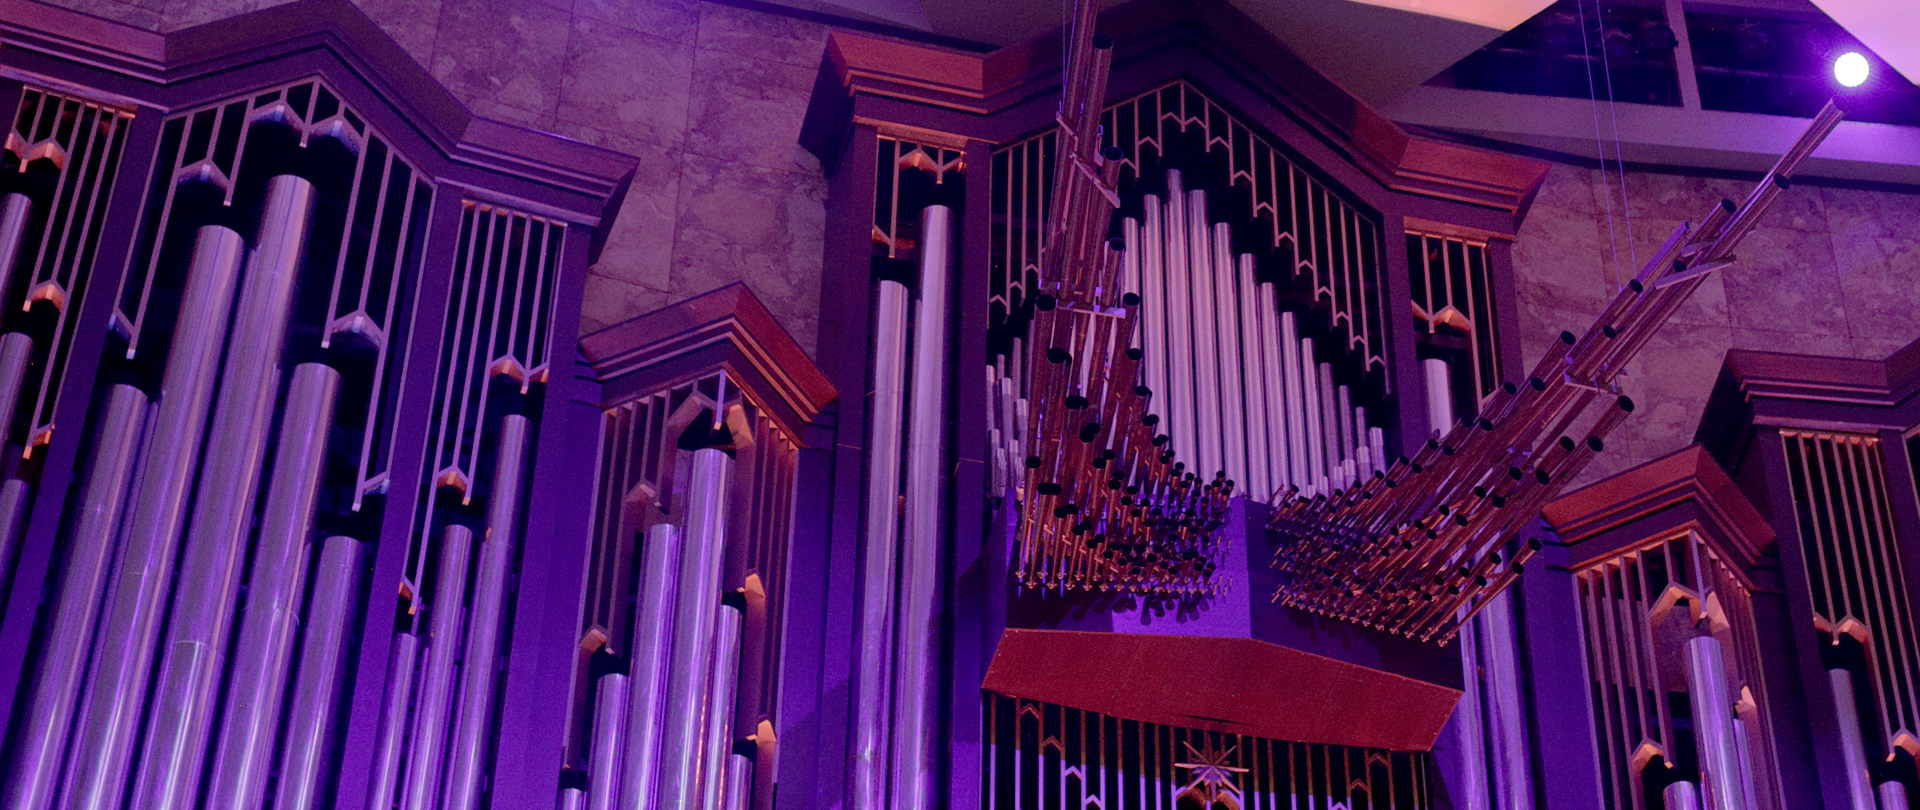 Organ Concerts
Next concert is September 29
